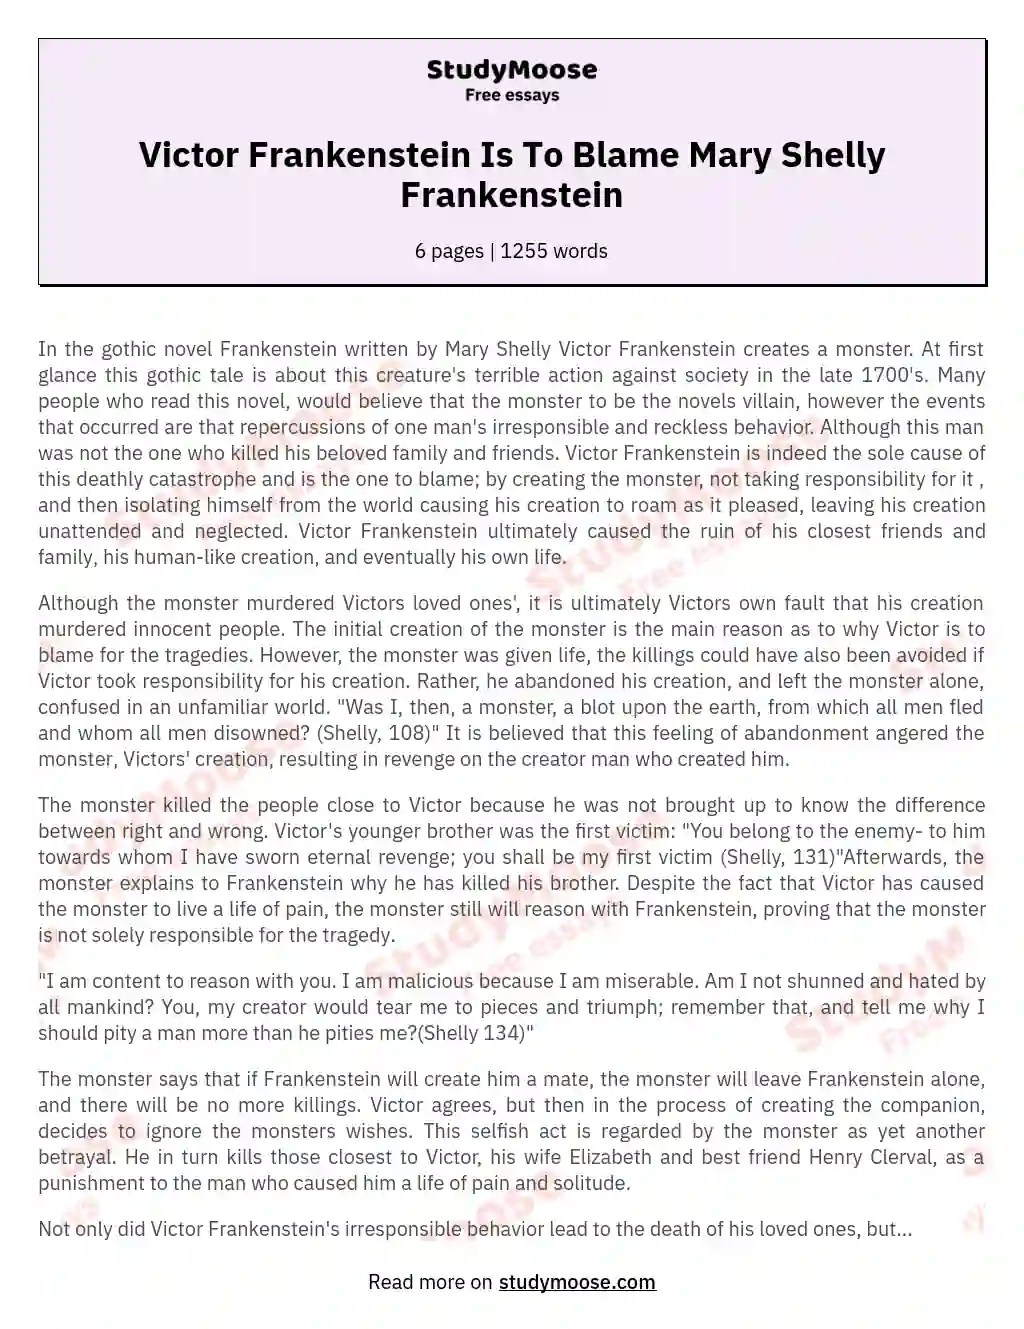 Victor Frankenstein Is To Blame Mary Shelly Frankenstein